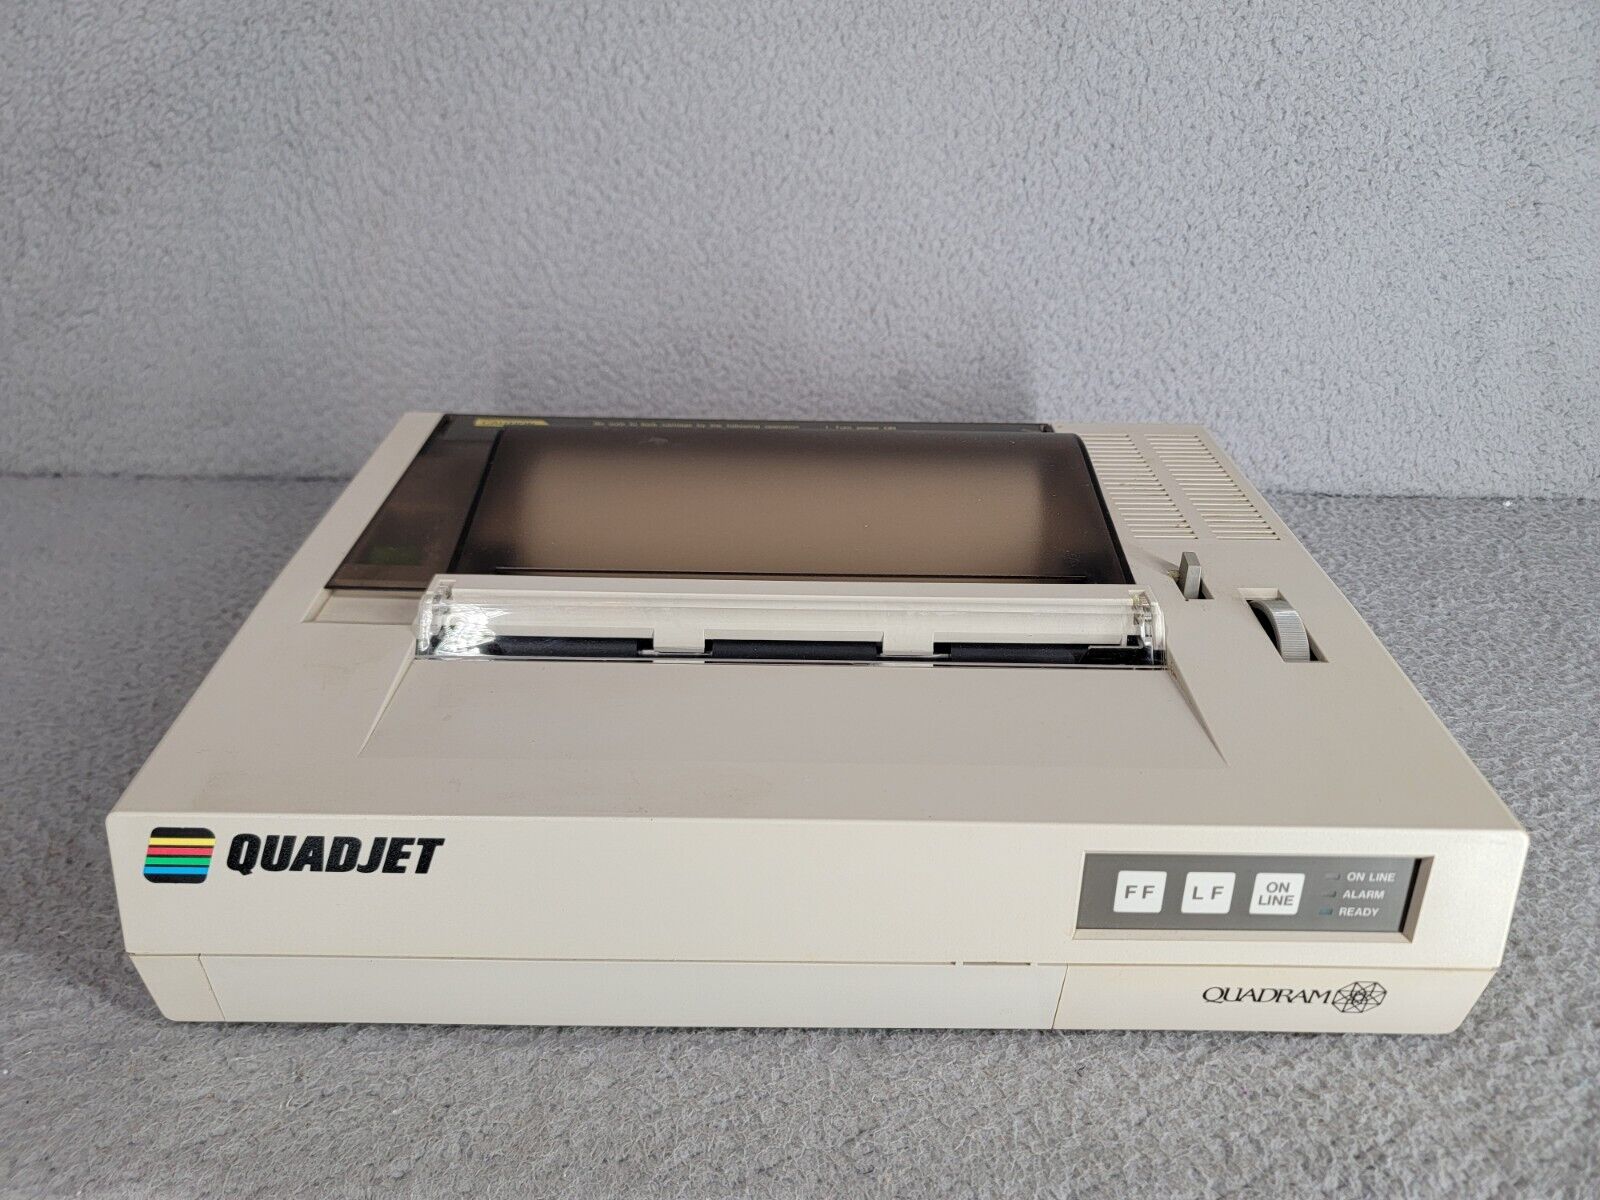 Vintage Quadjet Quadram Printer AS IS Untested For Parts 